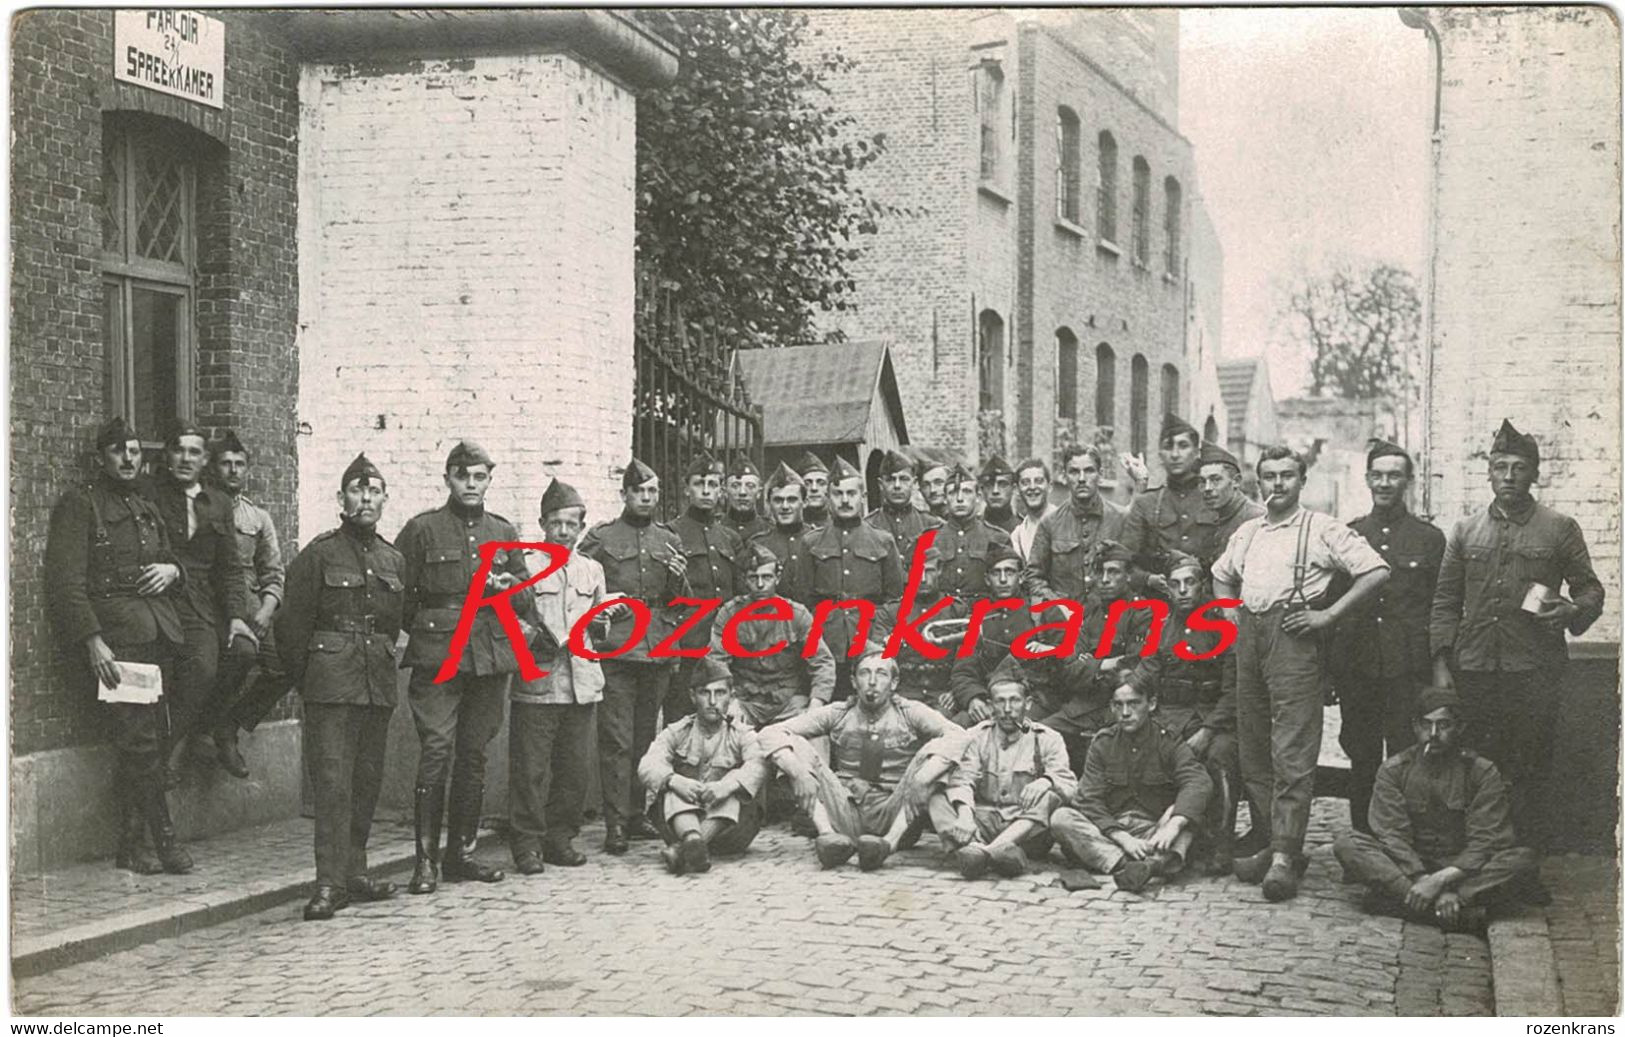 Lot van 8 acht unieke Fotokaarten Hemiksem Depot Saint Bernard Soldaten Belgisch Leger Military Photo Army CPA